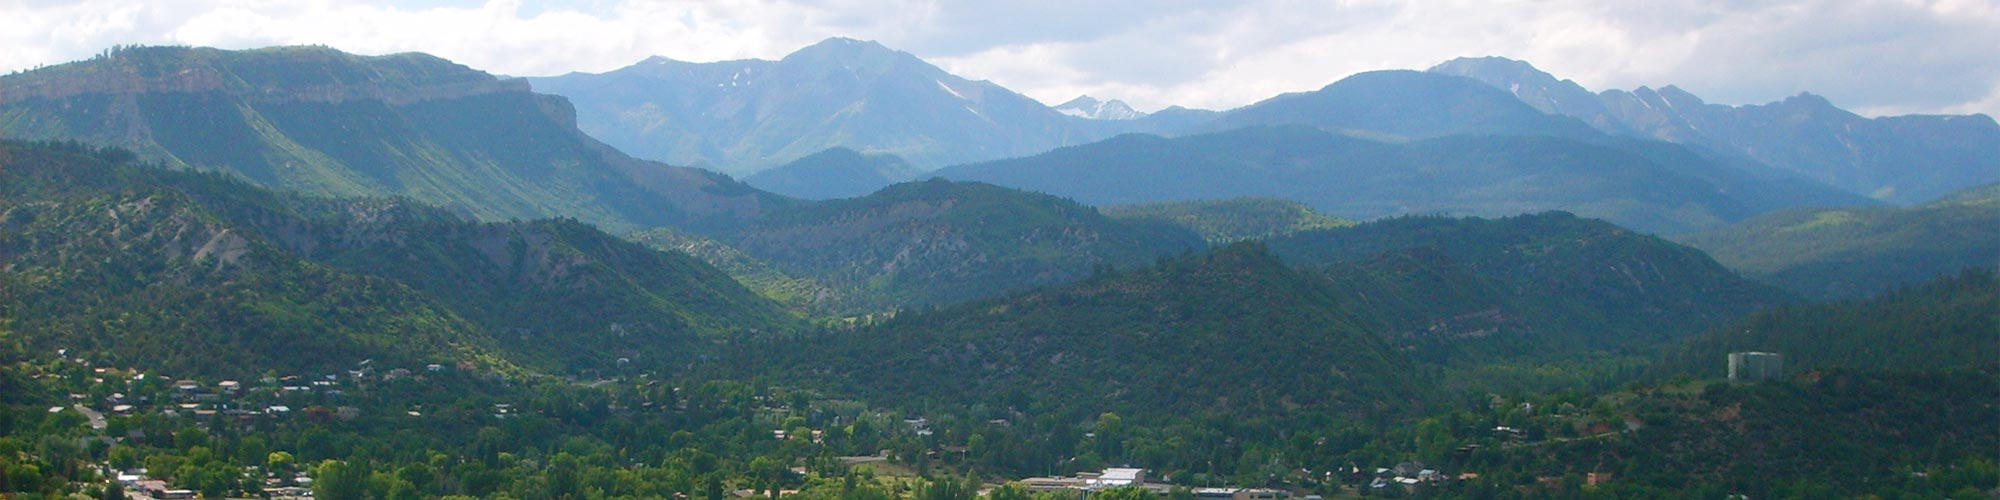 Classes & Workshops in Durango, Colorado